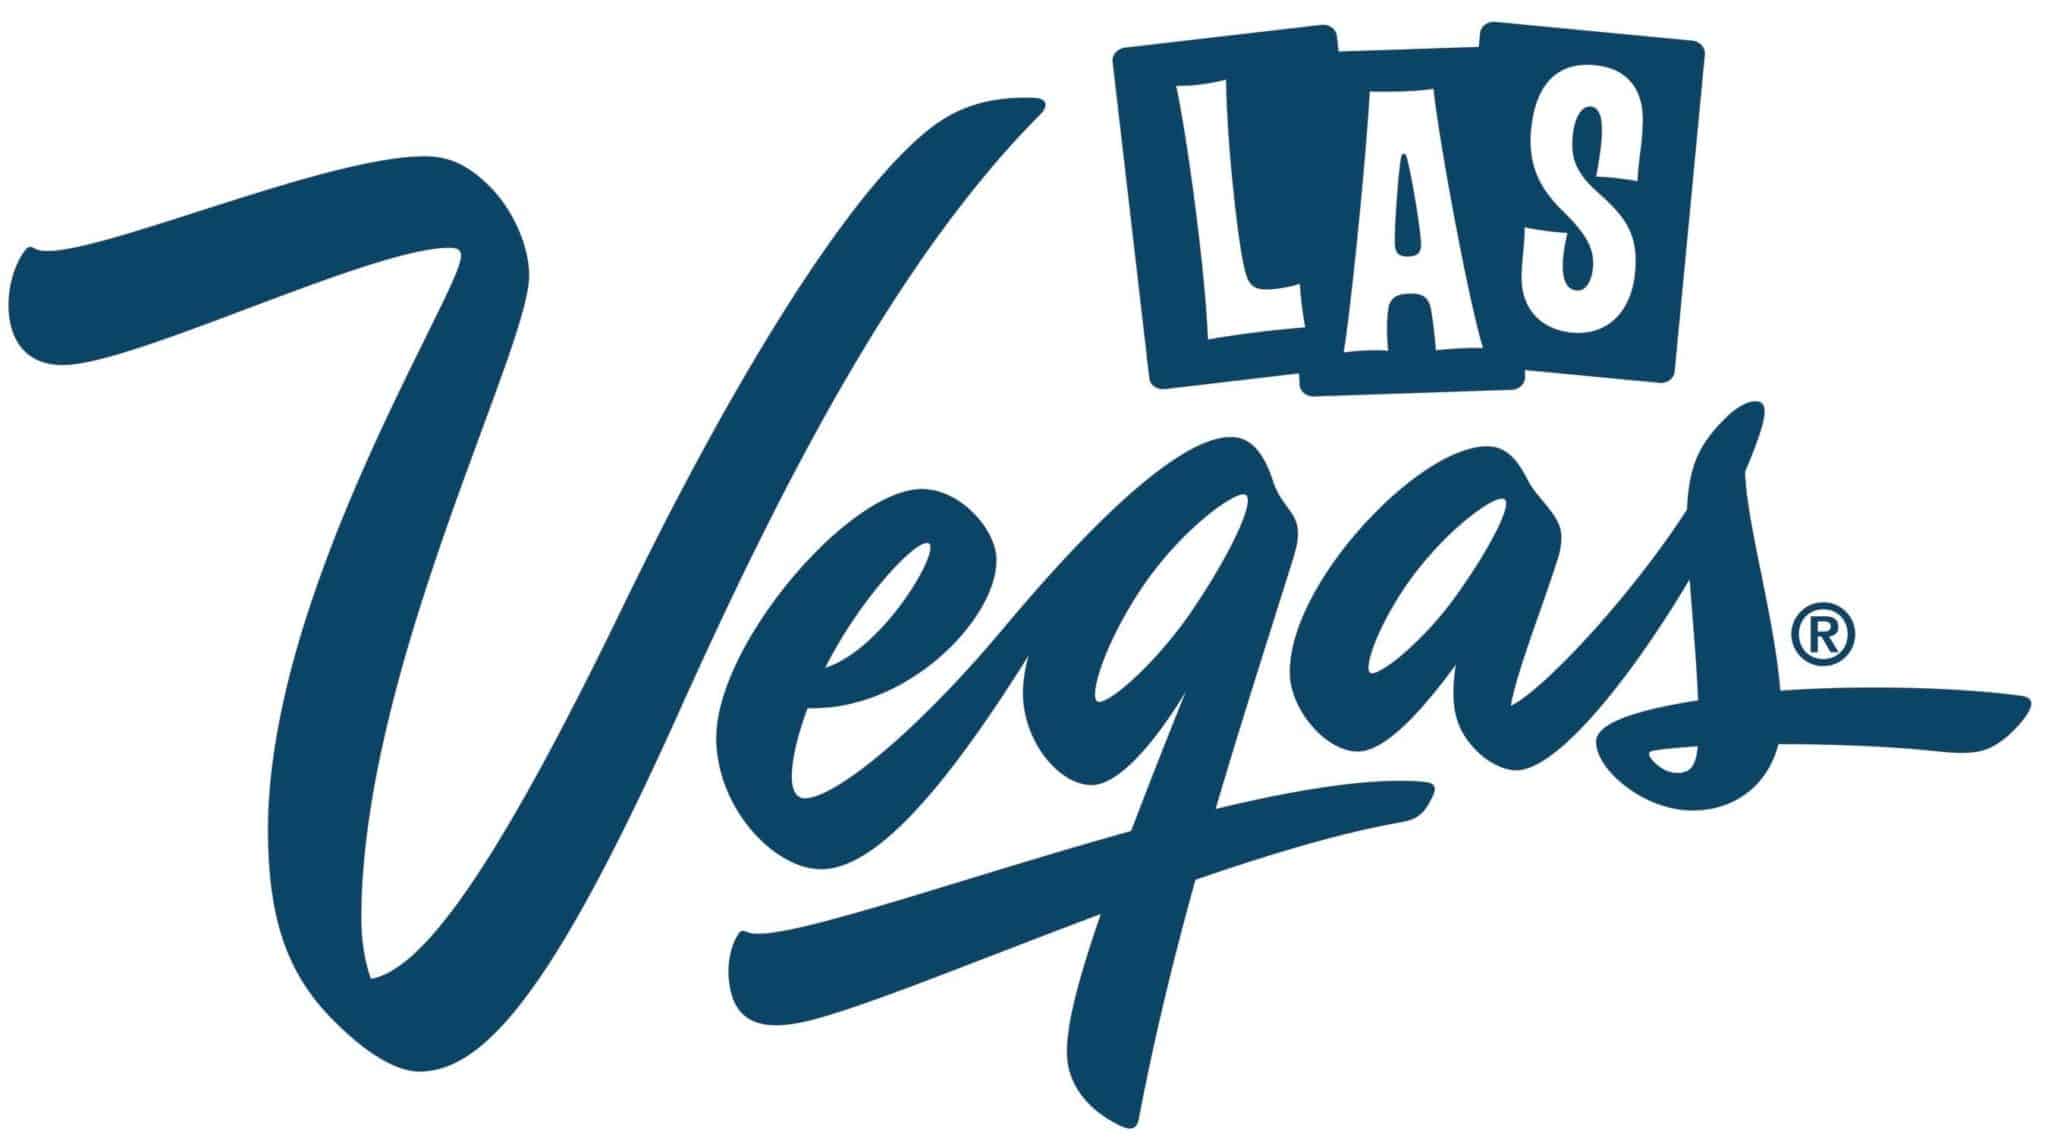 Las Vegas tourism